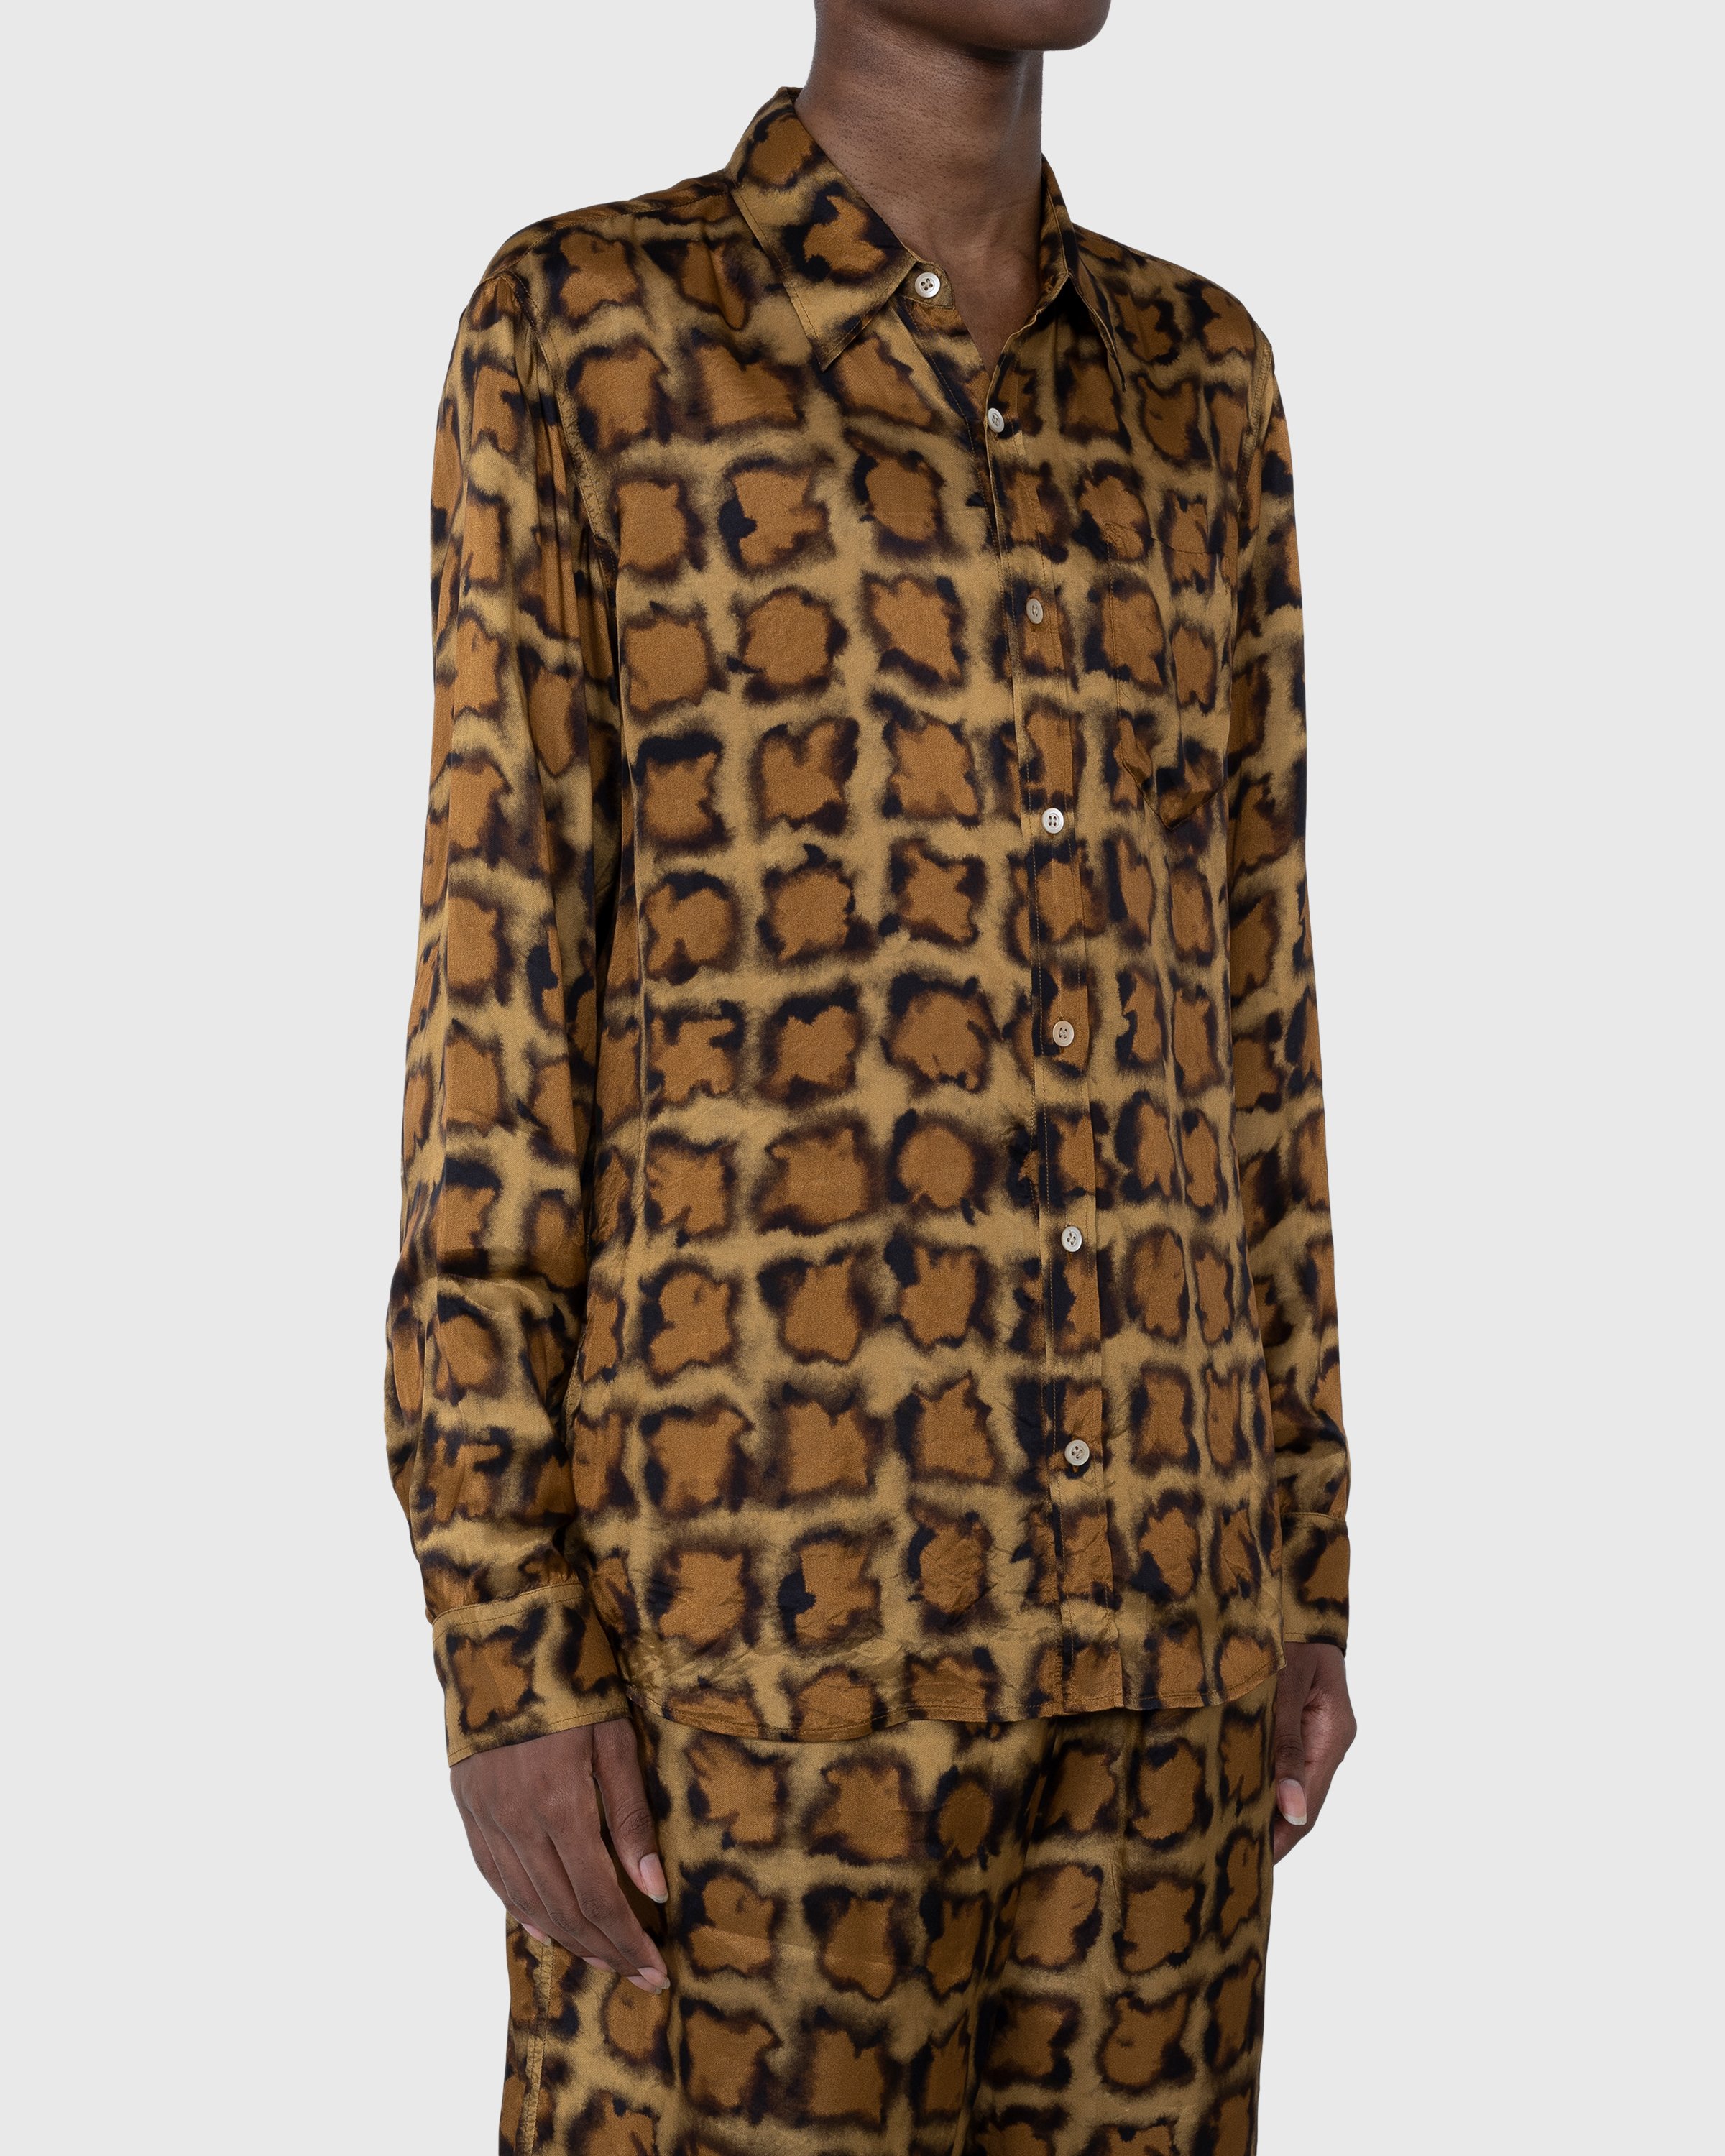 Dries van Noten - Corbino Shirt Camel - Clothing - Yellow - Image 3